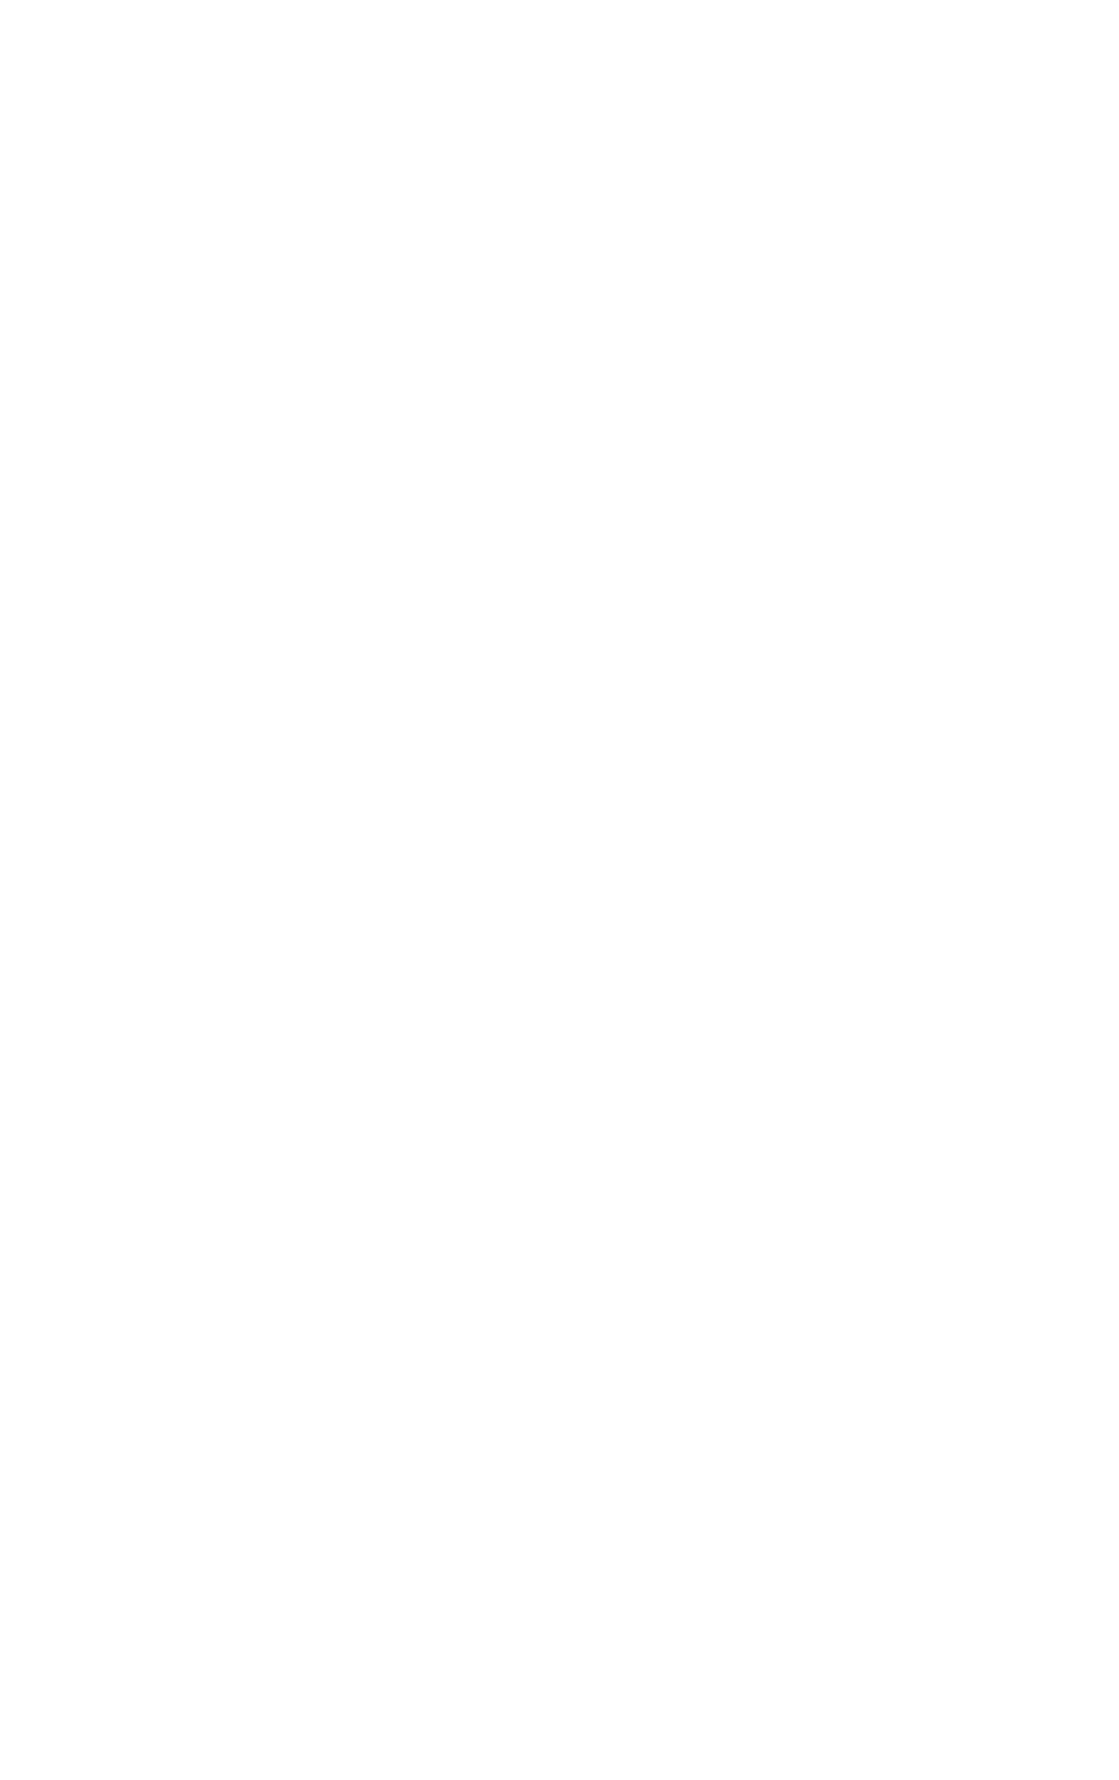 Help mucinex flip the script on antibiotic overuse